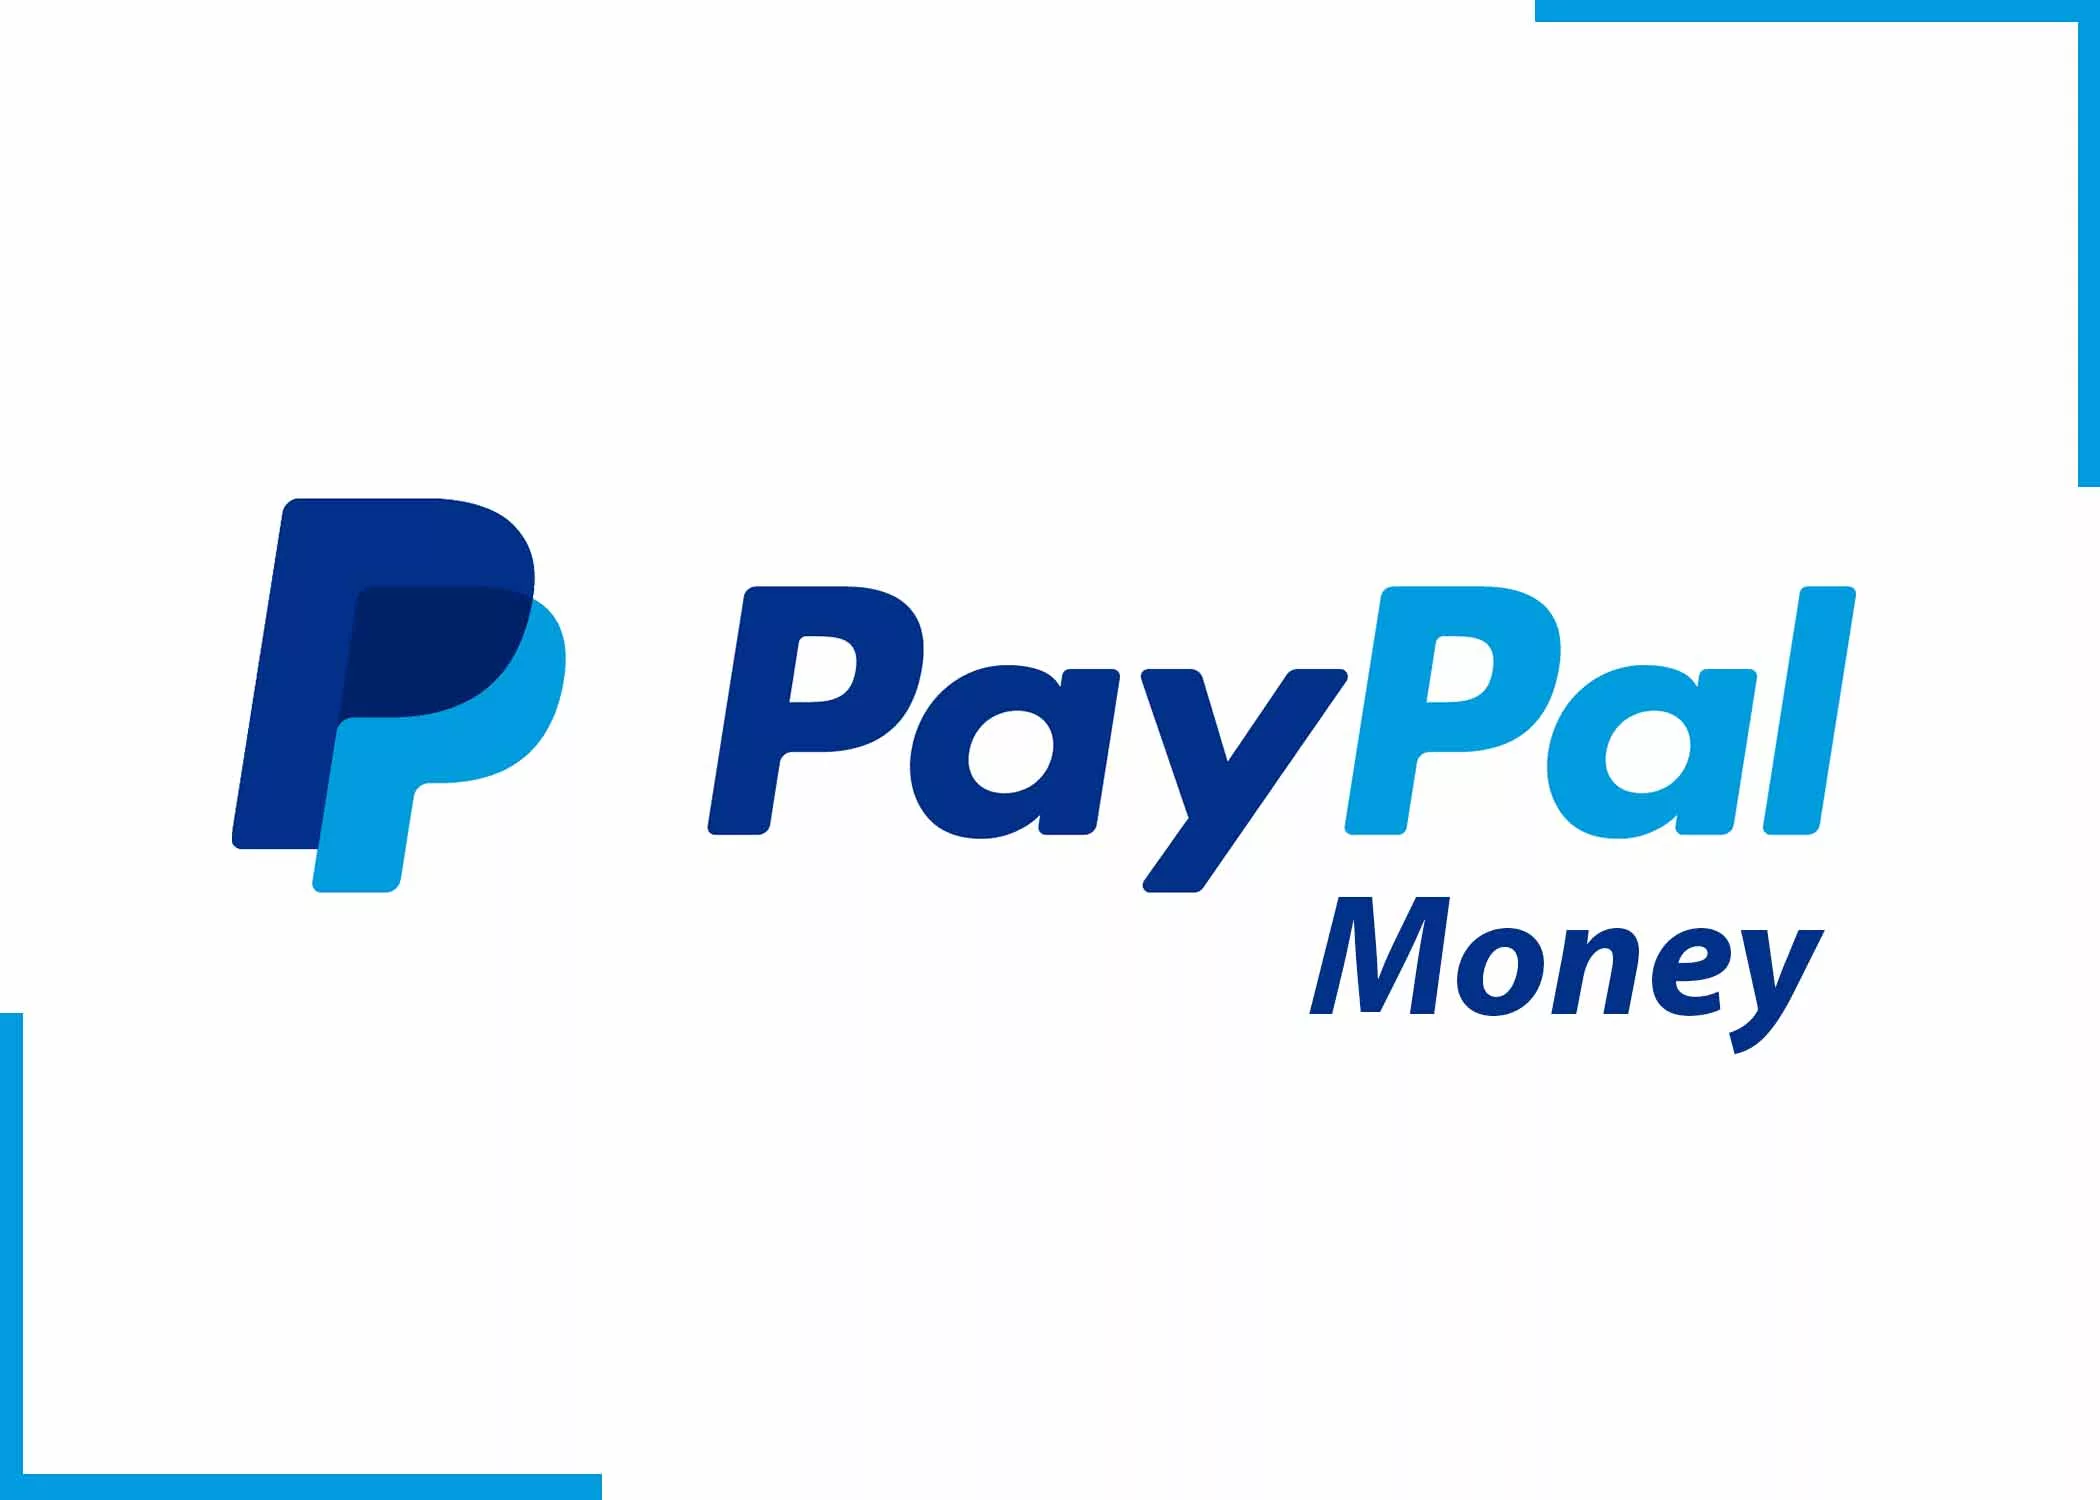 PayPal Money